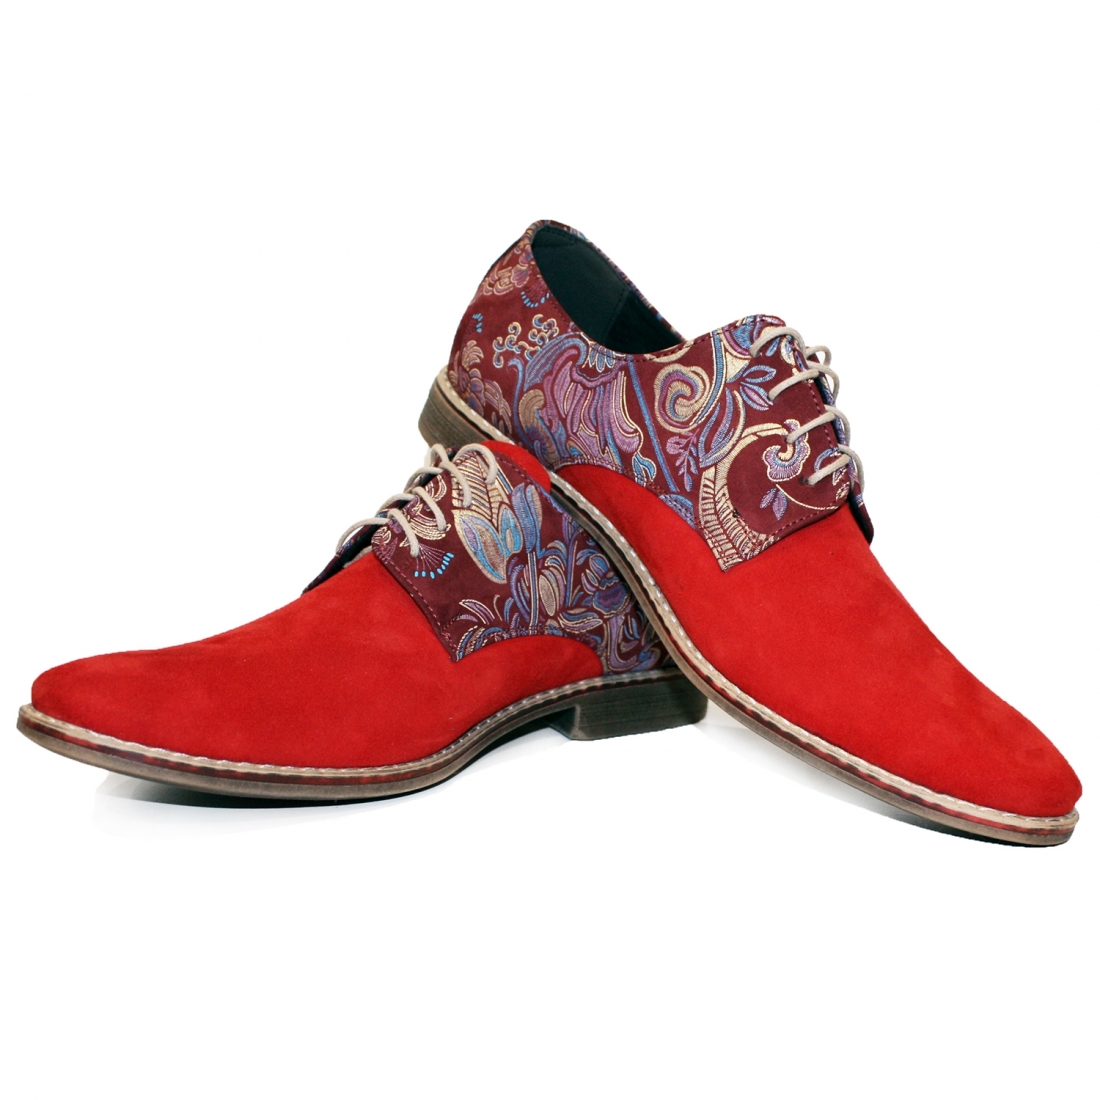 Modello Skreelo - クラシックシューズ - Handmade Colorful Italian Leather Shoes